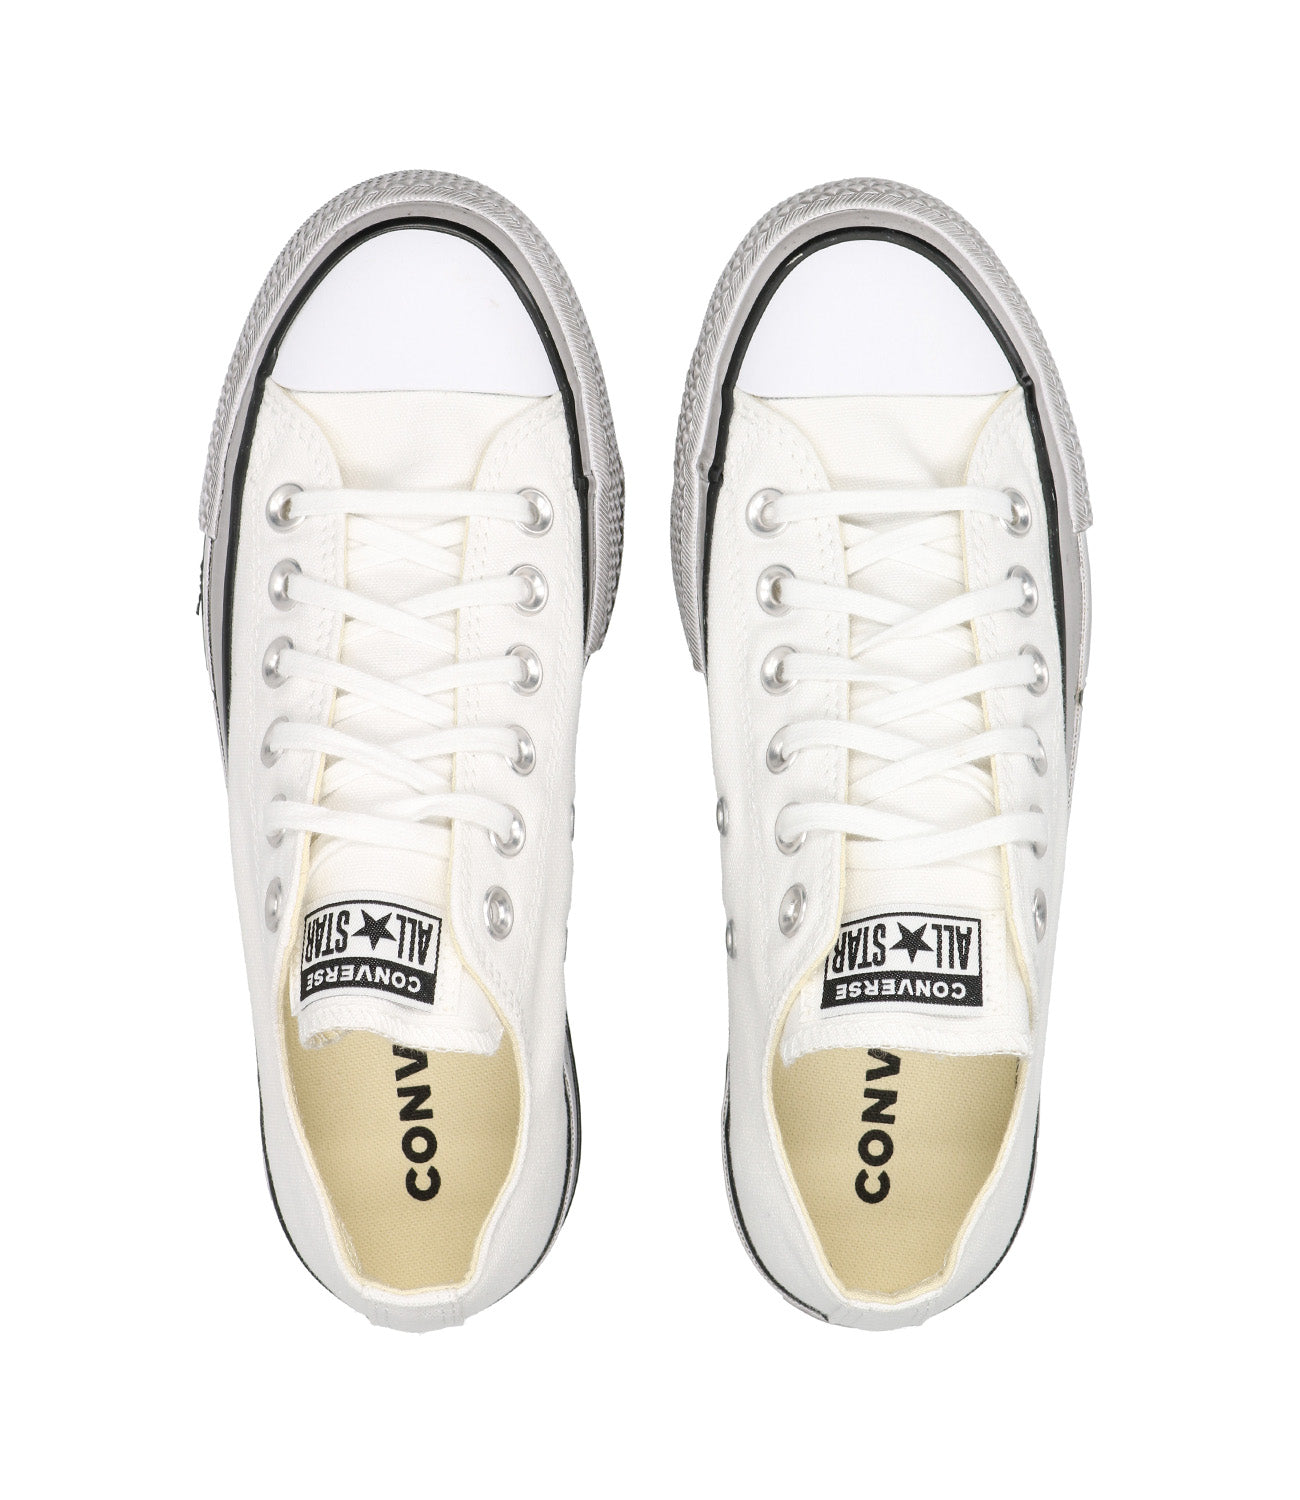 Converse Chuck Taylor All Star Platform Ltd Ox White Sneakers